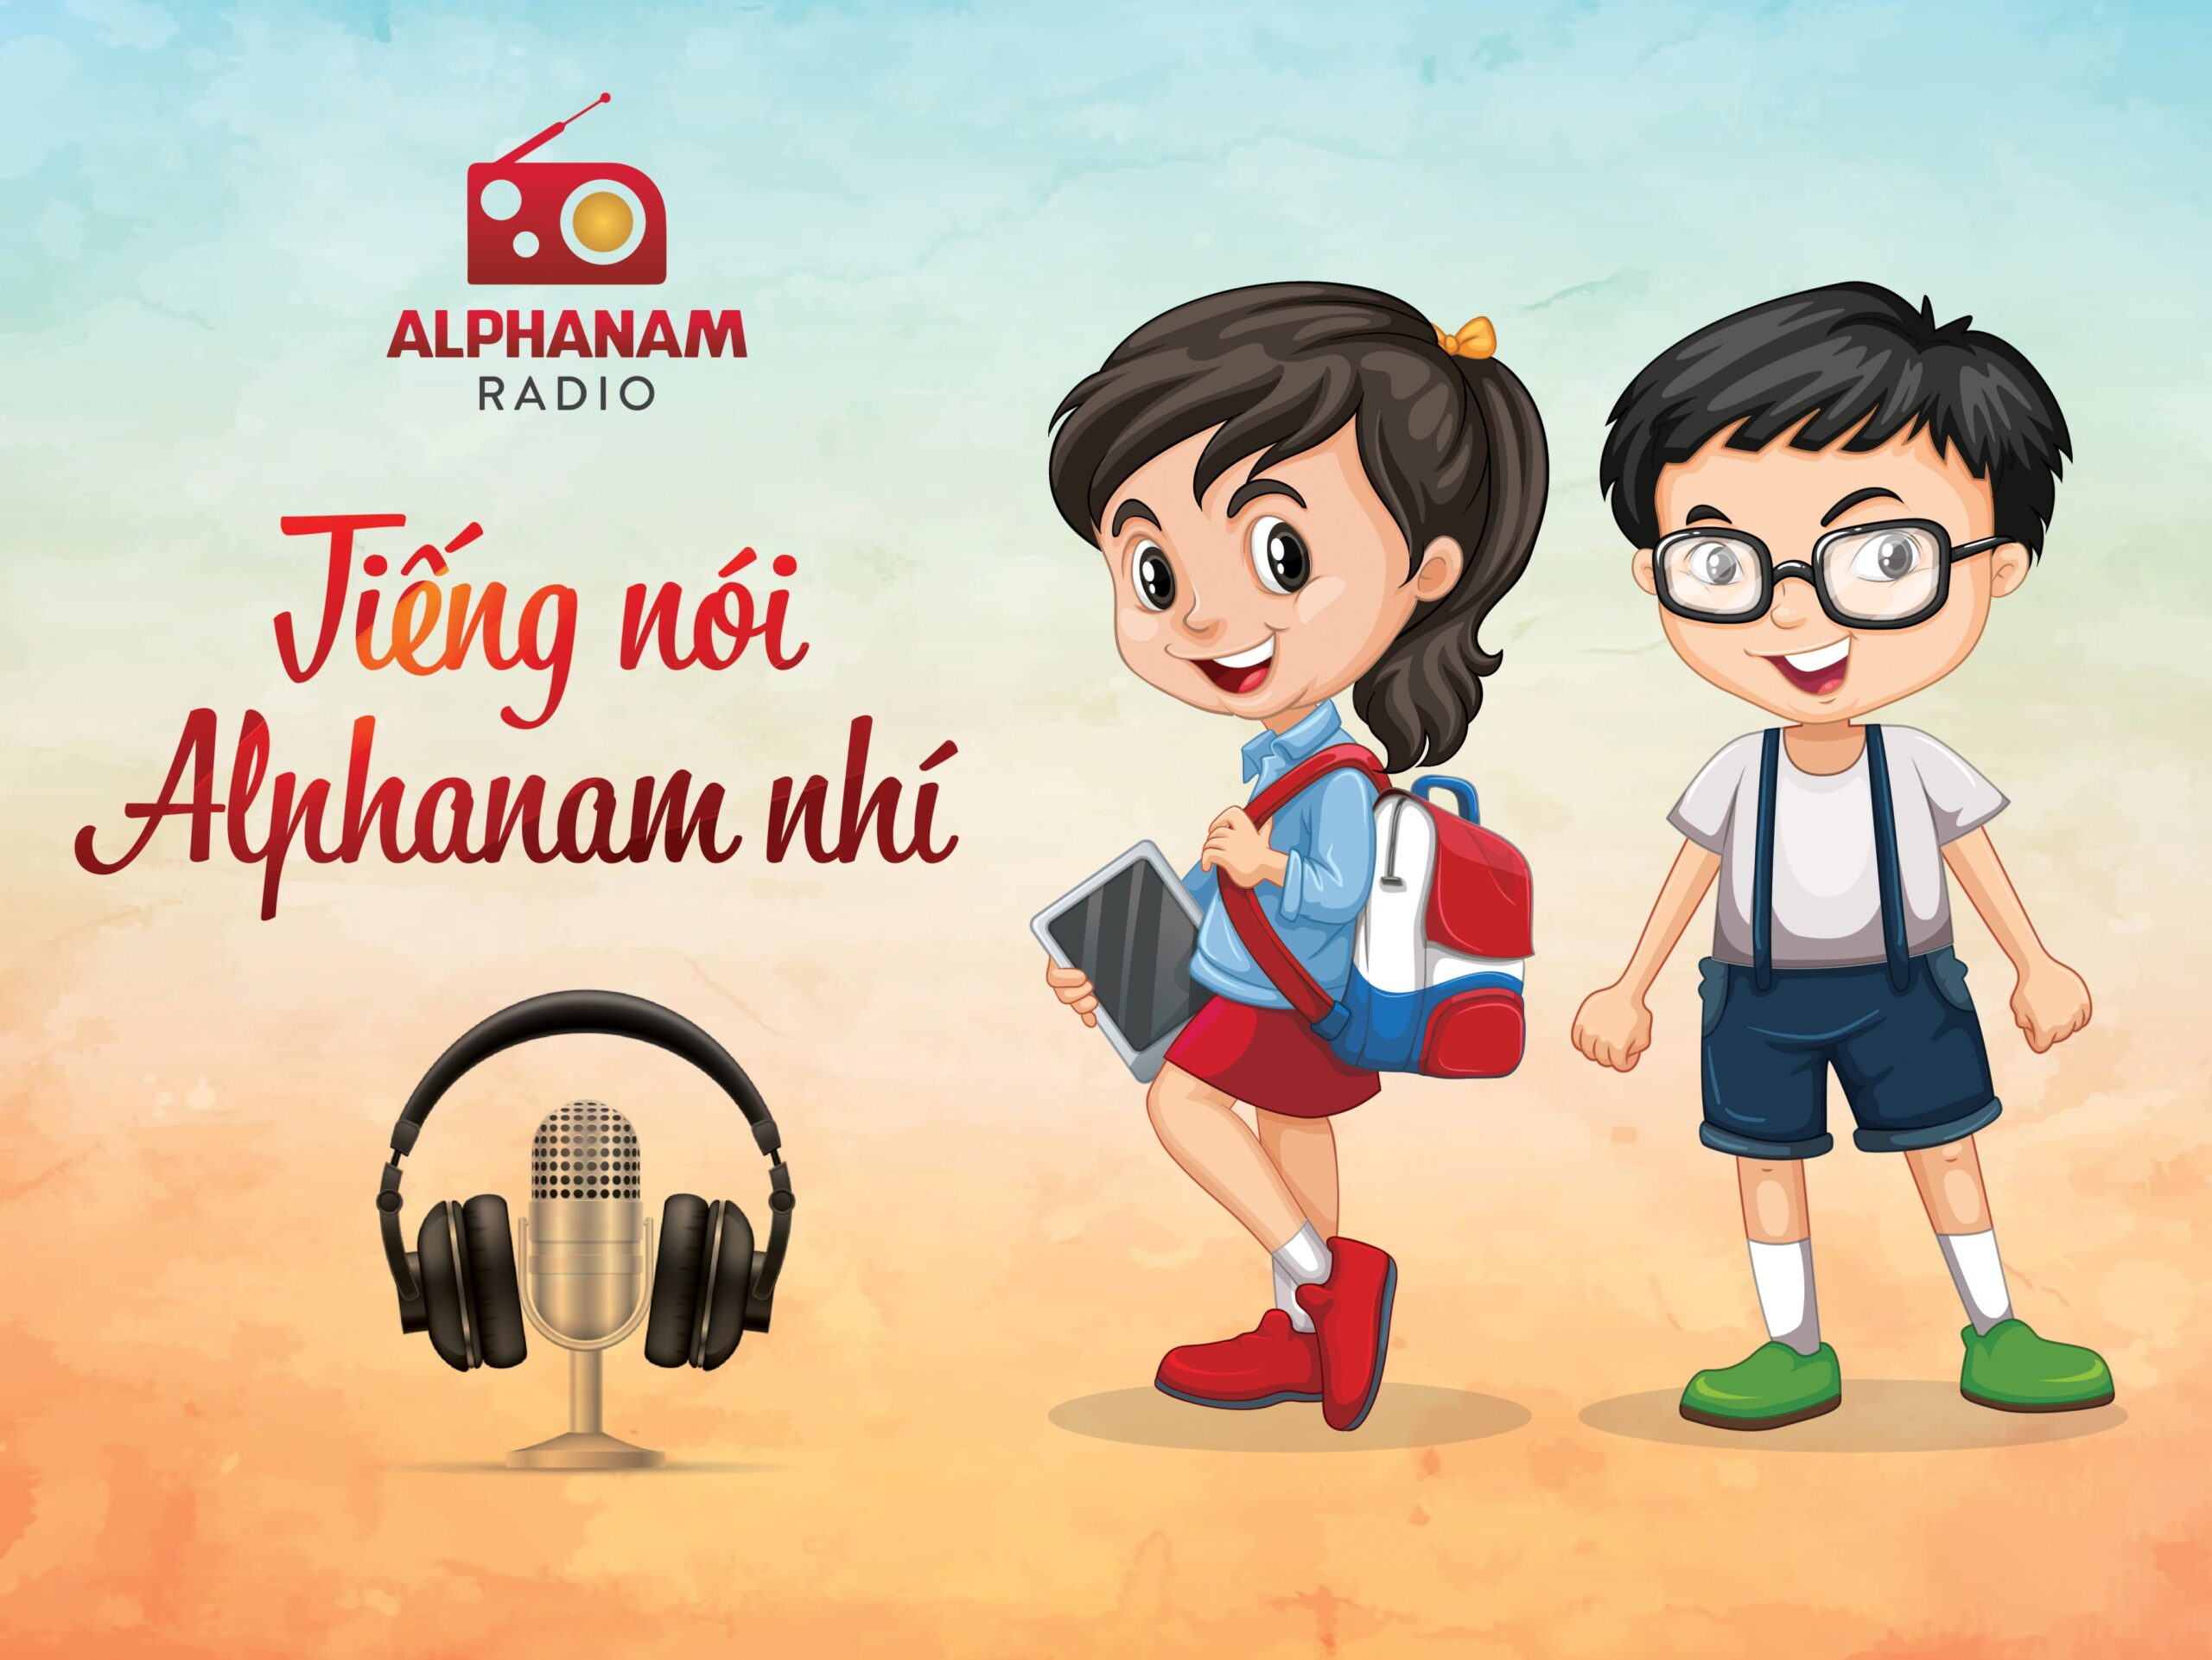 Read more about the article ALPHANAM RADIO SỐ 4: “TIẾNG NÓI ALPHANAM NHÍ”